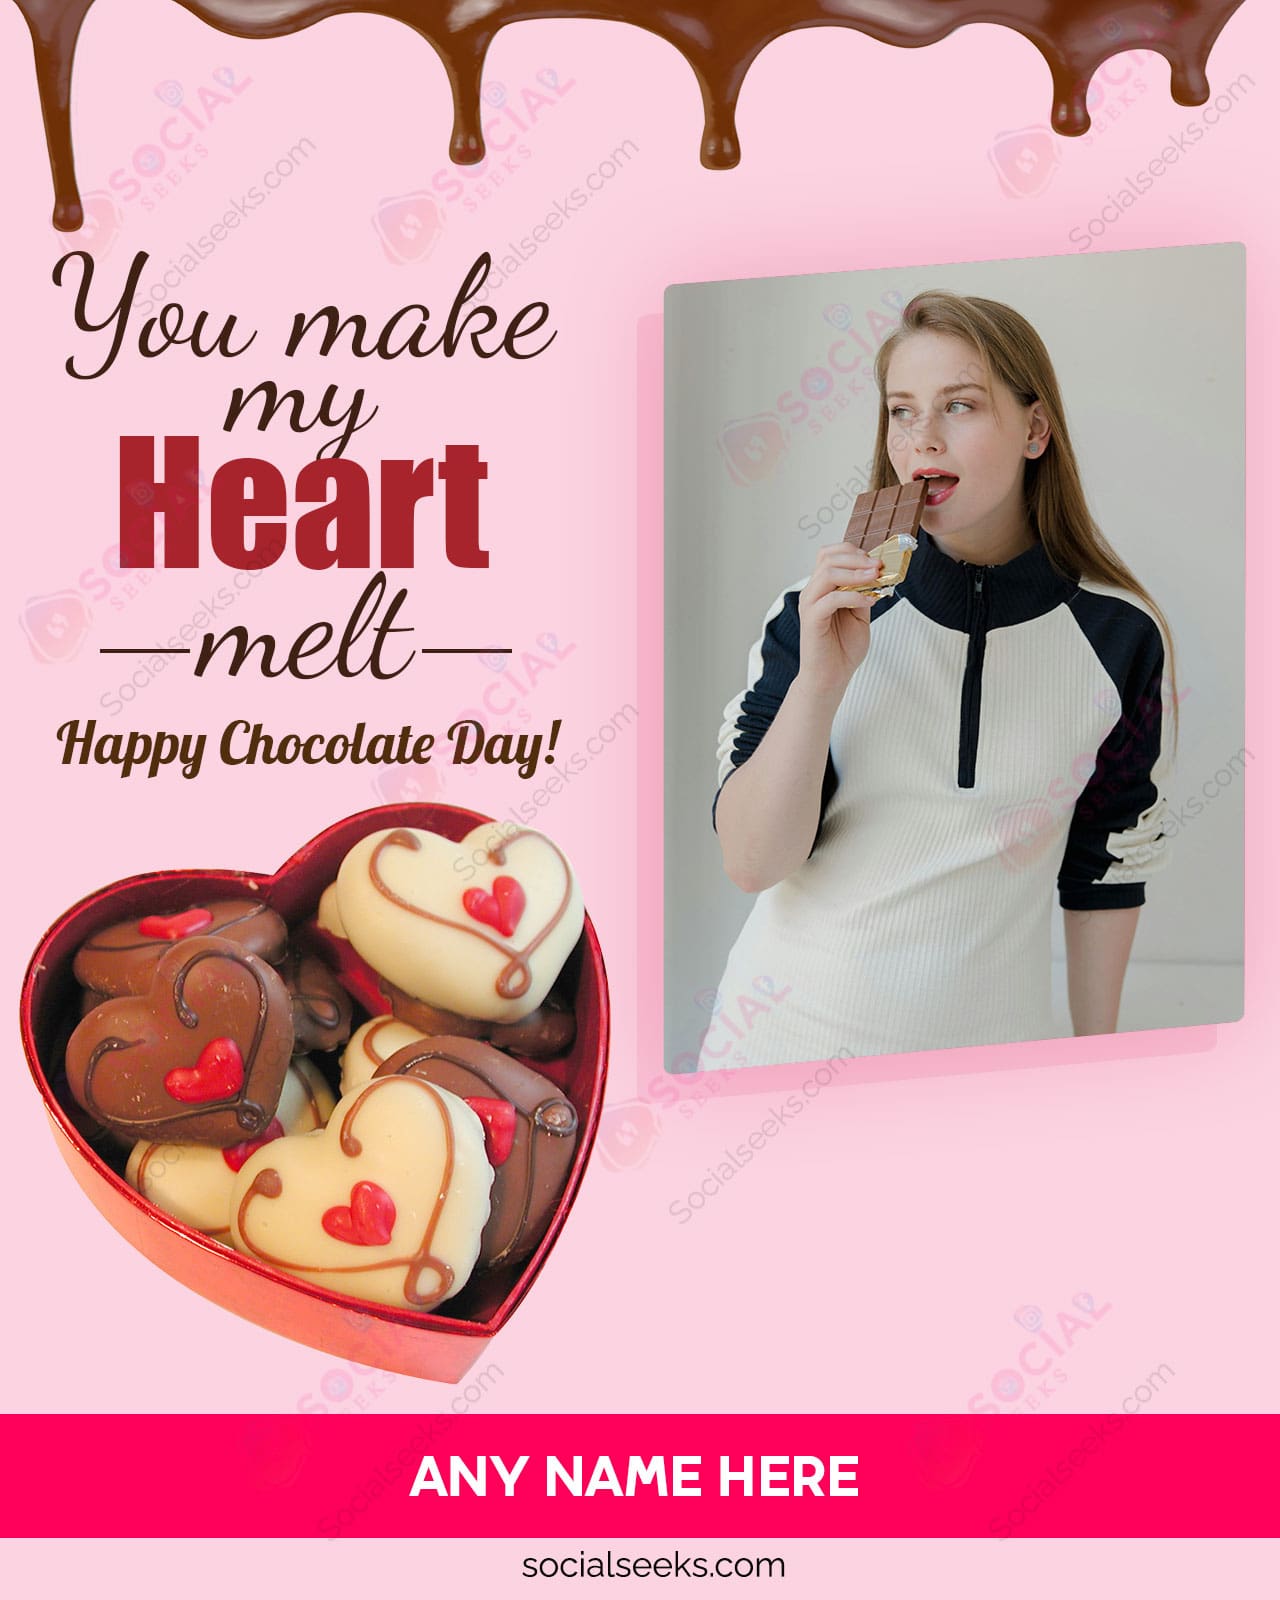 Happy Chocolate Day Photo Frame Wishes